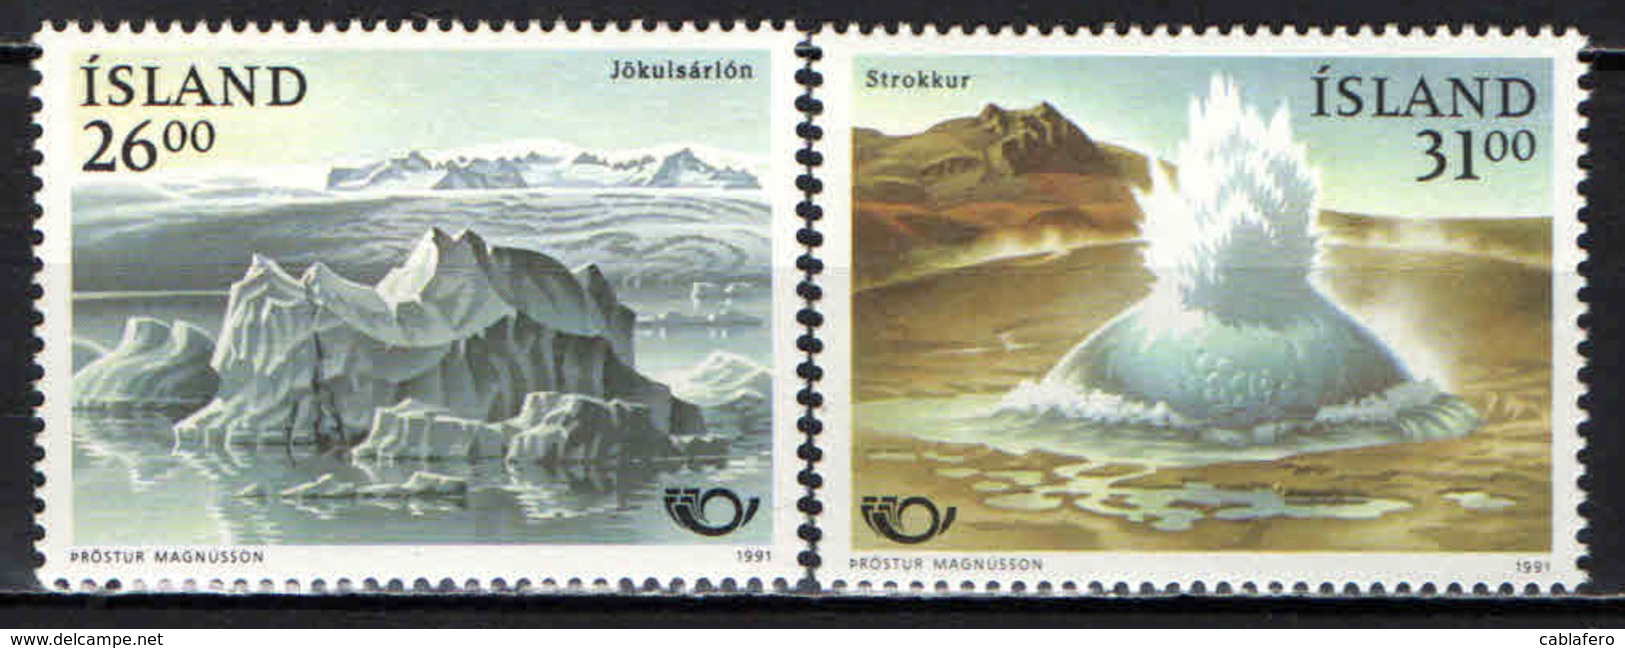 ISLANDA - 1991 - TURISMO NEI PAESI NORDICI: ICEBERGS, JOKULSARLON - GEYSER, STROKKUR - MNH - Nuovi